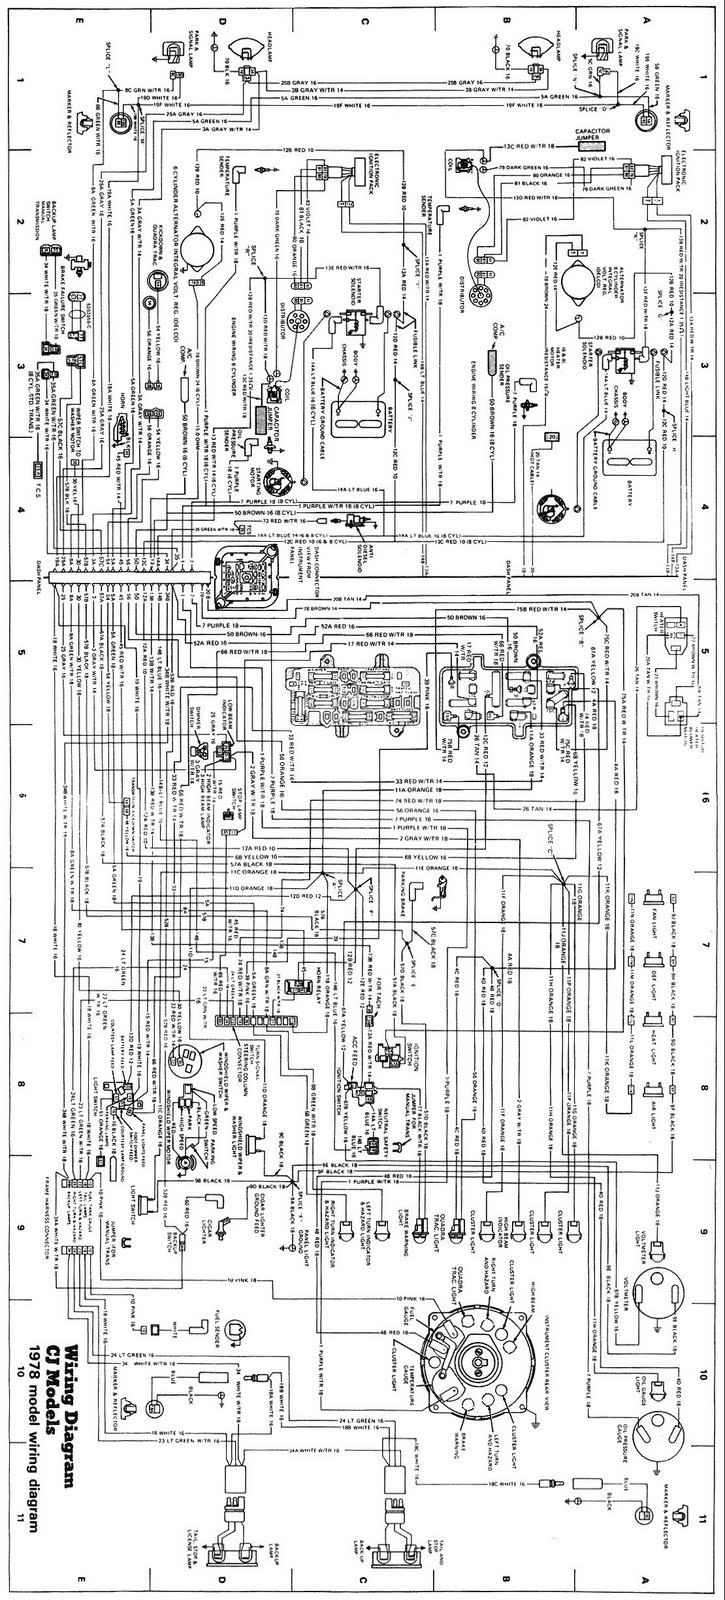 Free Auto Wiring Diagram: 1978 Jeep CJ All Series Wiring Diagrams